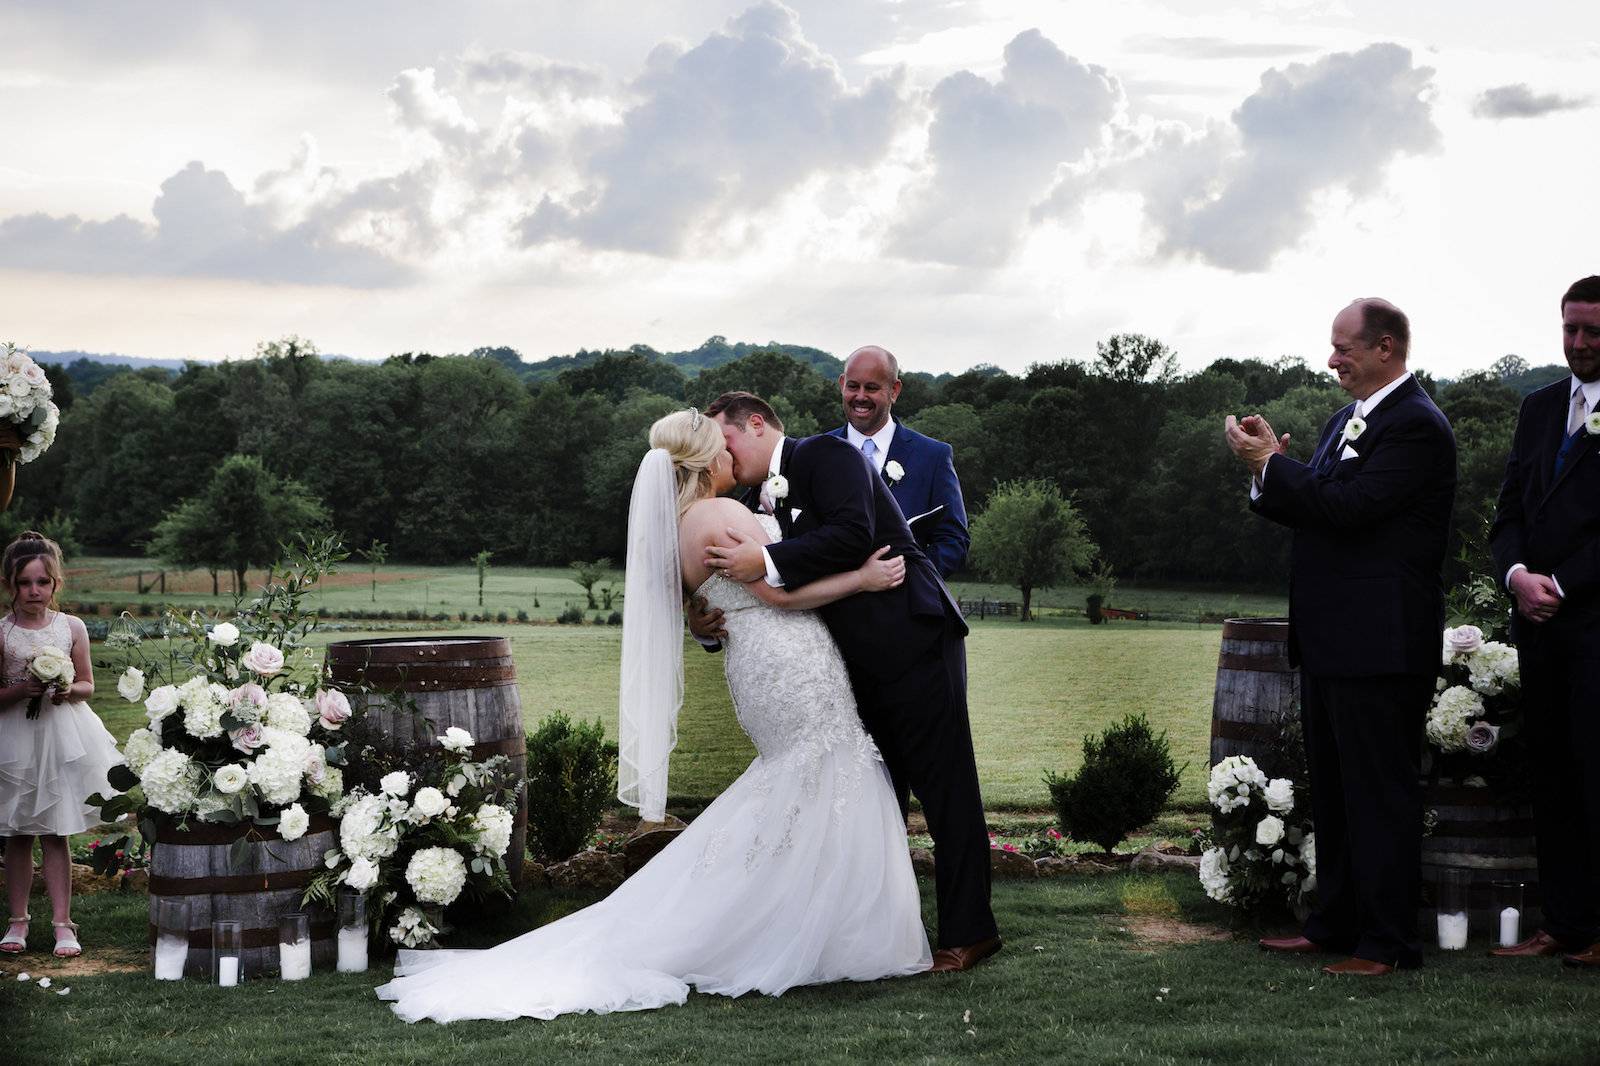 Renee + Zack’s Glam Barn Wedding at Allenbrooke Farms by Abigail Volkmann Photography |  Nashville